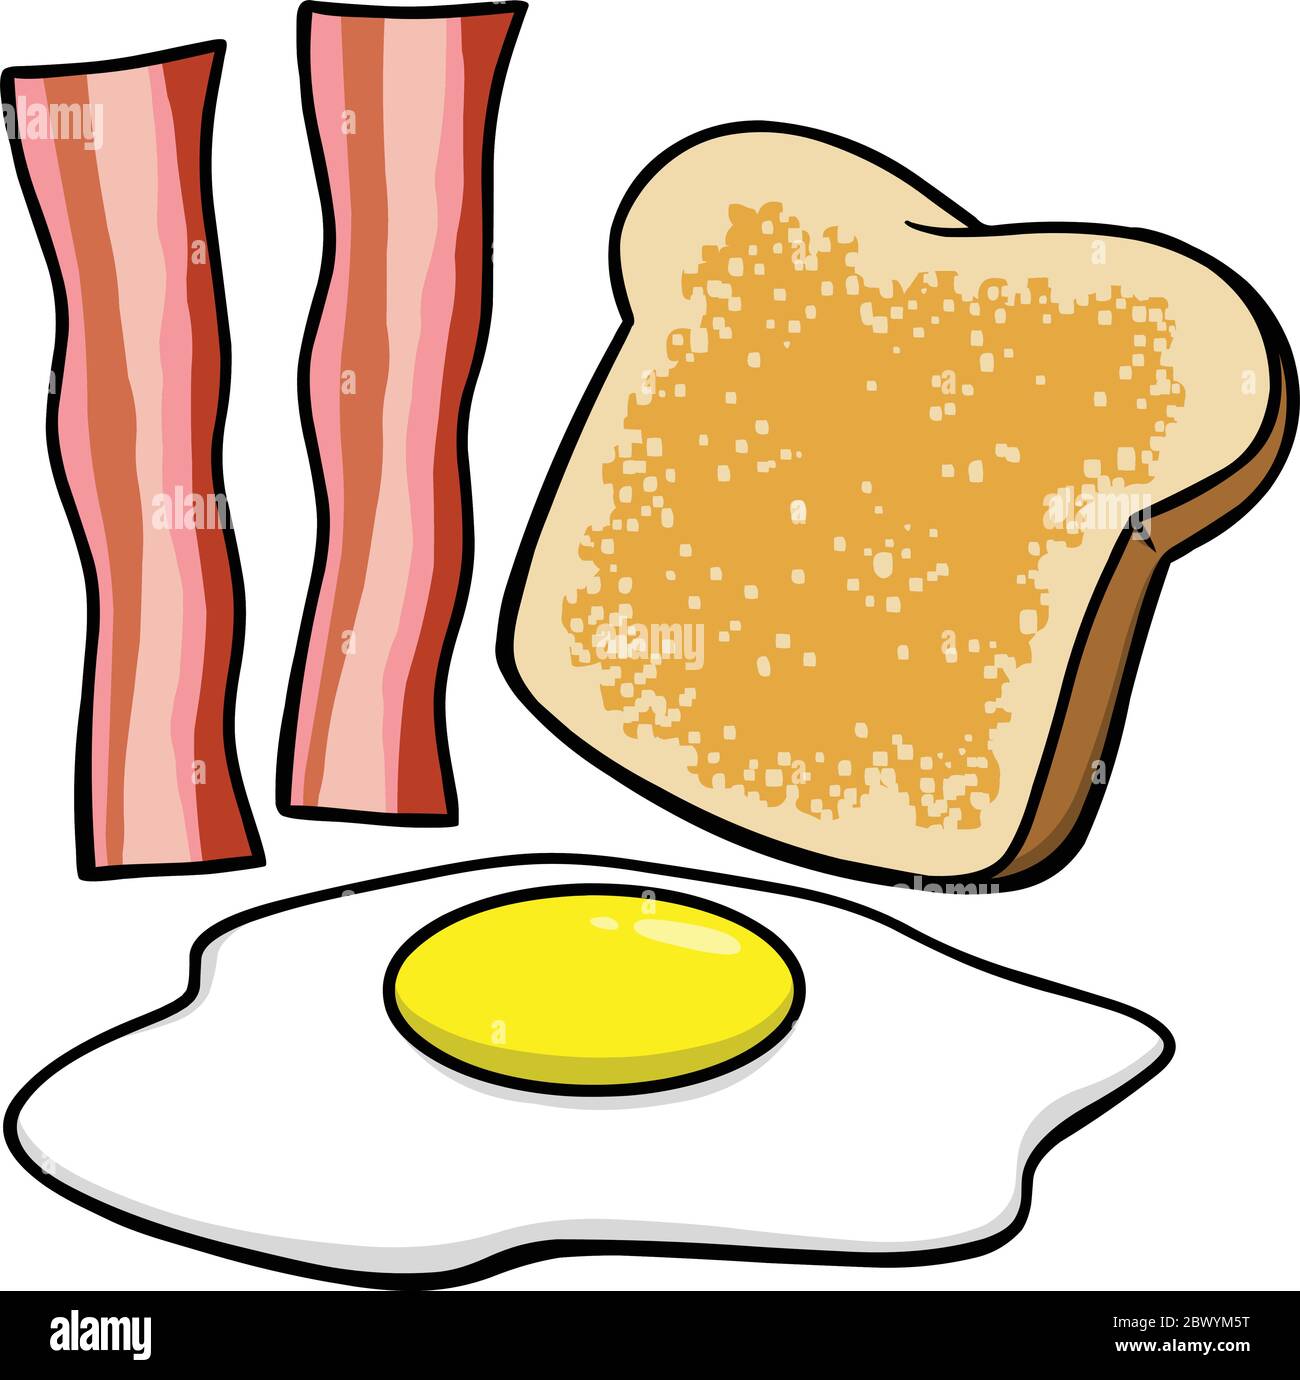 bacon and eggs cartoon